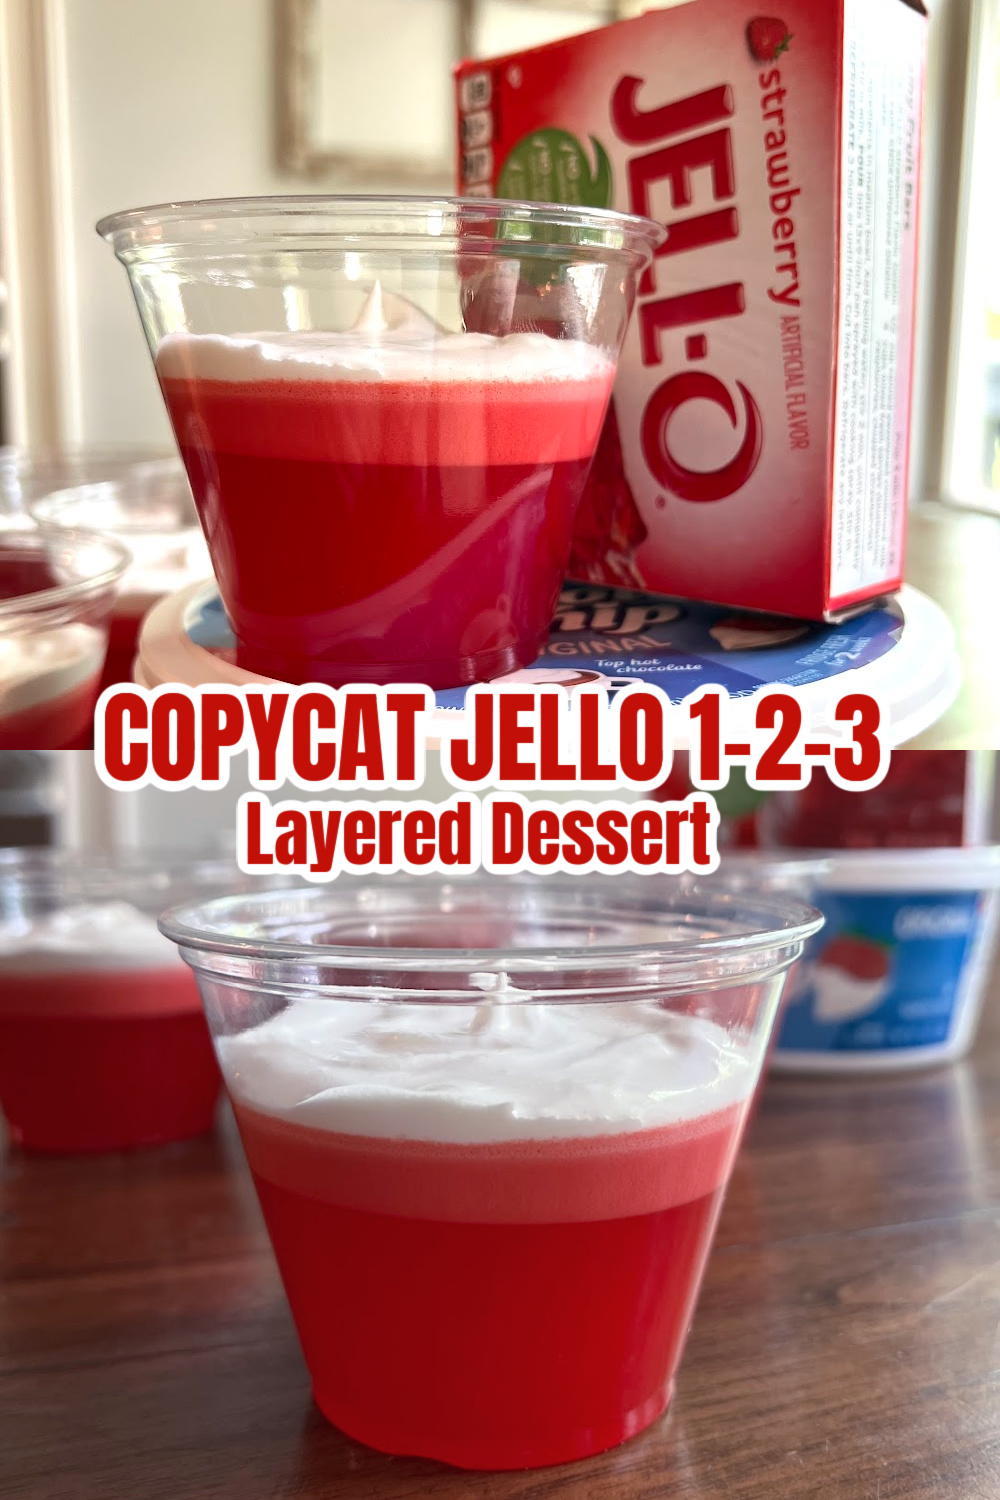 Copycat Jello 1-2-3 Layered Dessert